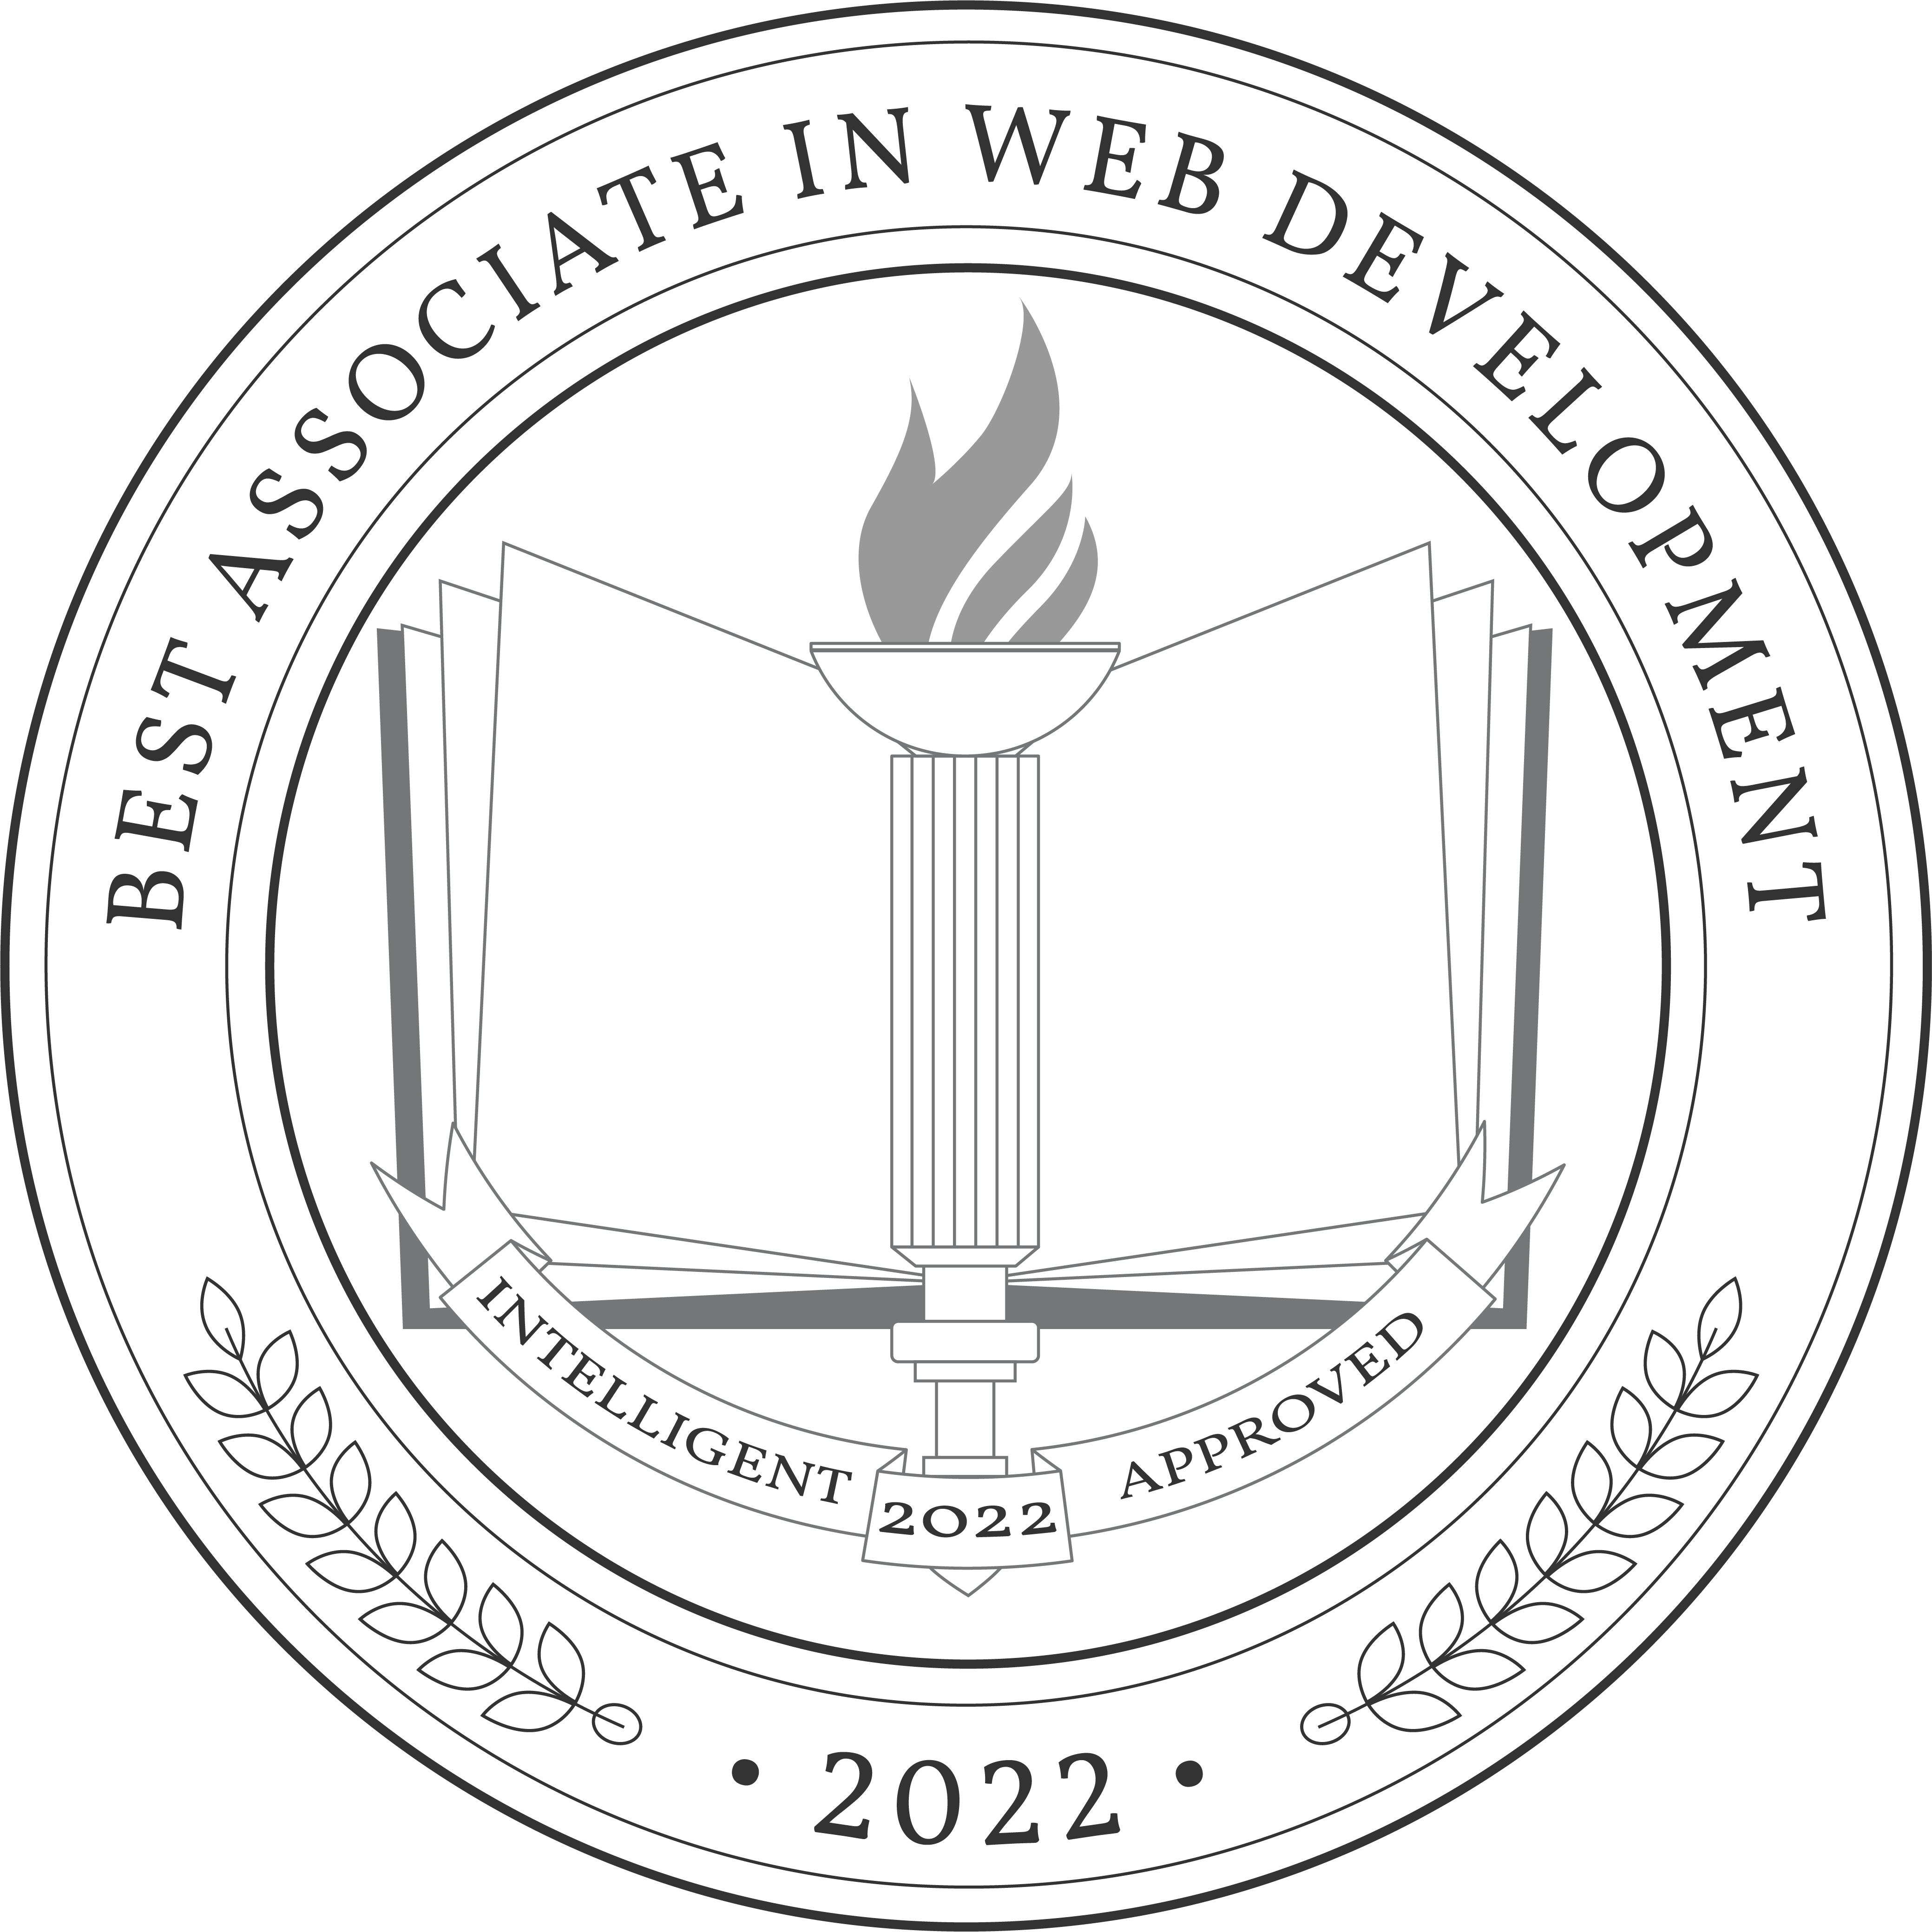 Best-Associate-in-Web-Development-Badge.png